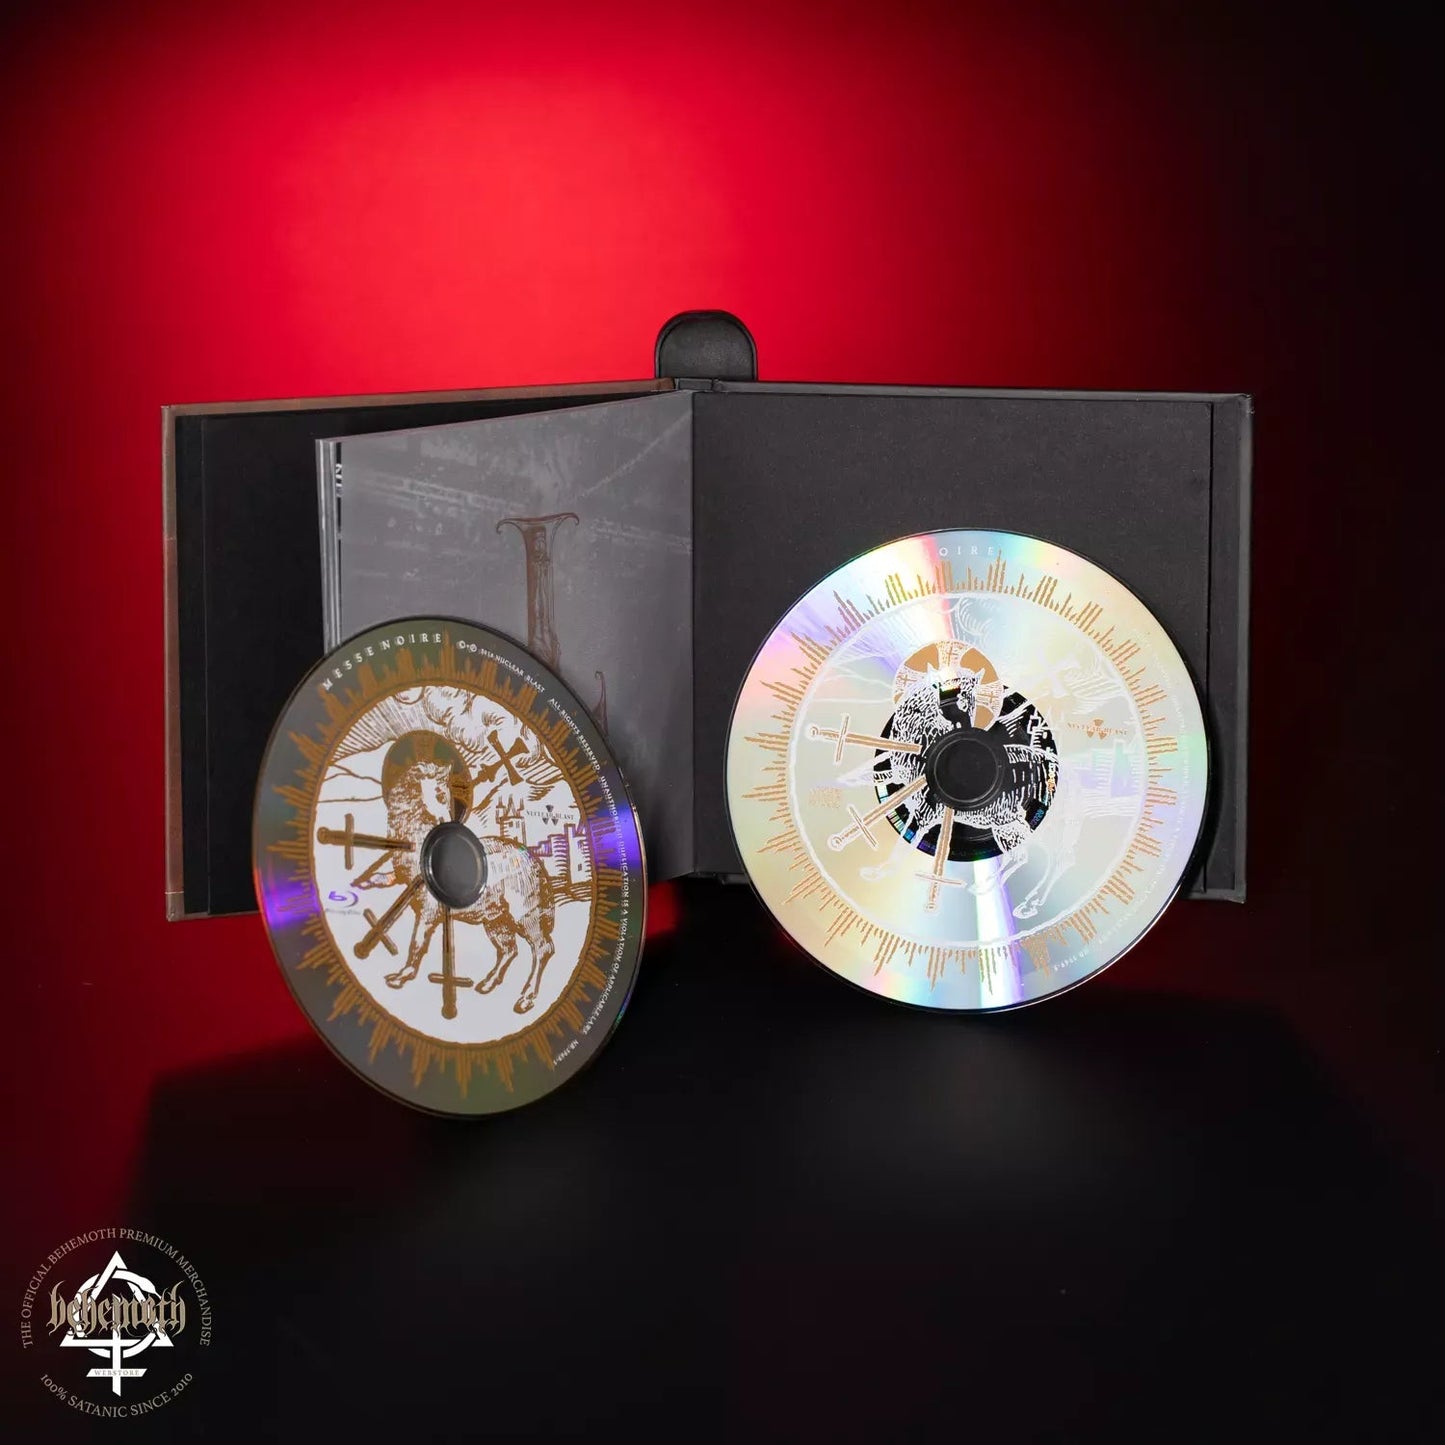 BEHEMOTH - Messe Noire Blu-Ray/CD, signed